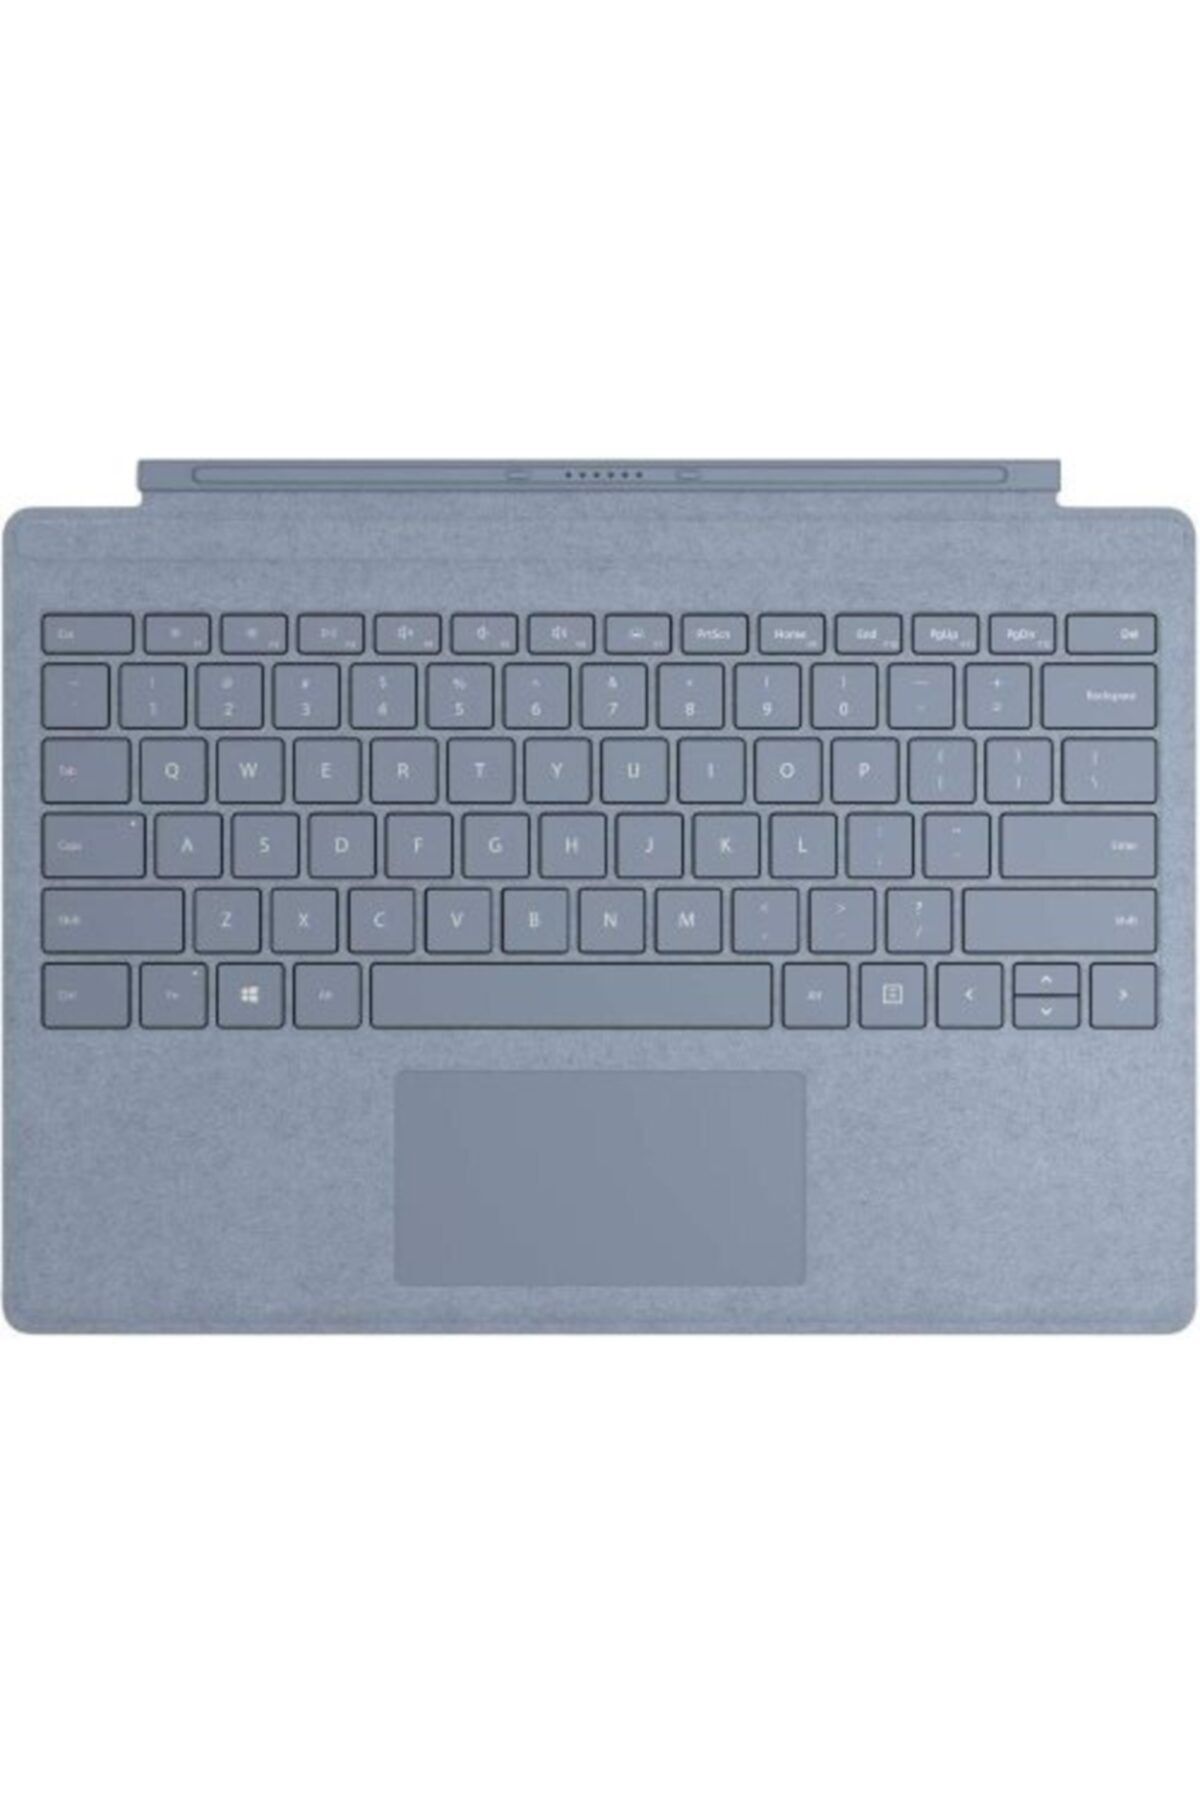 Microsoft Surface Pro Tipi Kapak Ingilizce Klavye-aydınlatmalı –model: Ffq-00121-renk: Buz Mavisi